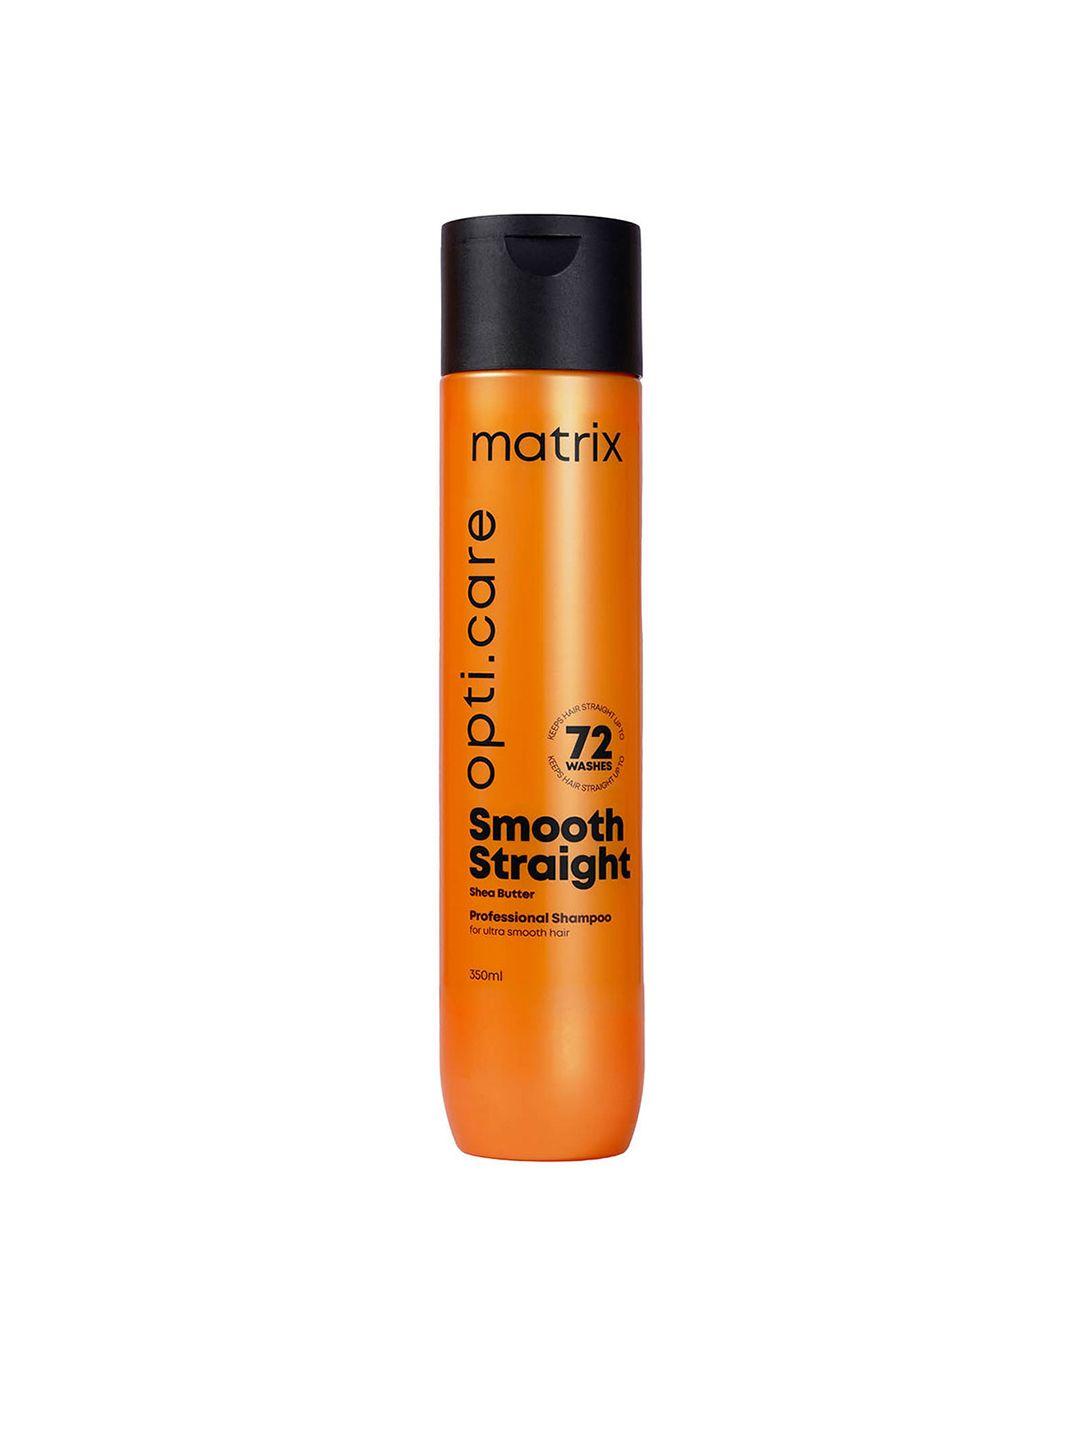 matrix opti care smooth straight professional shampoo with shea butter-350ml